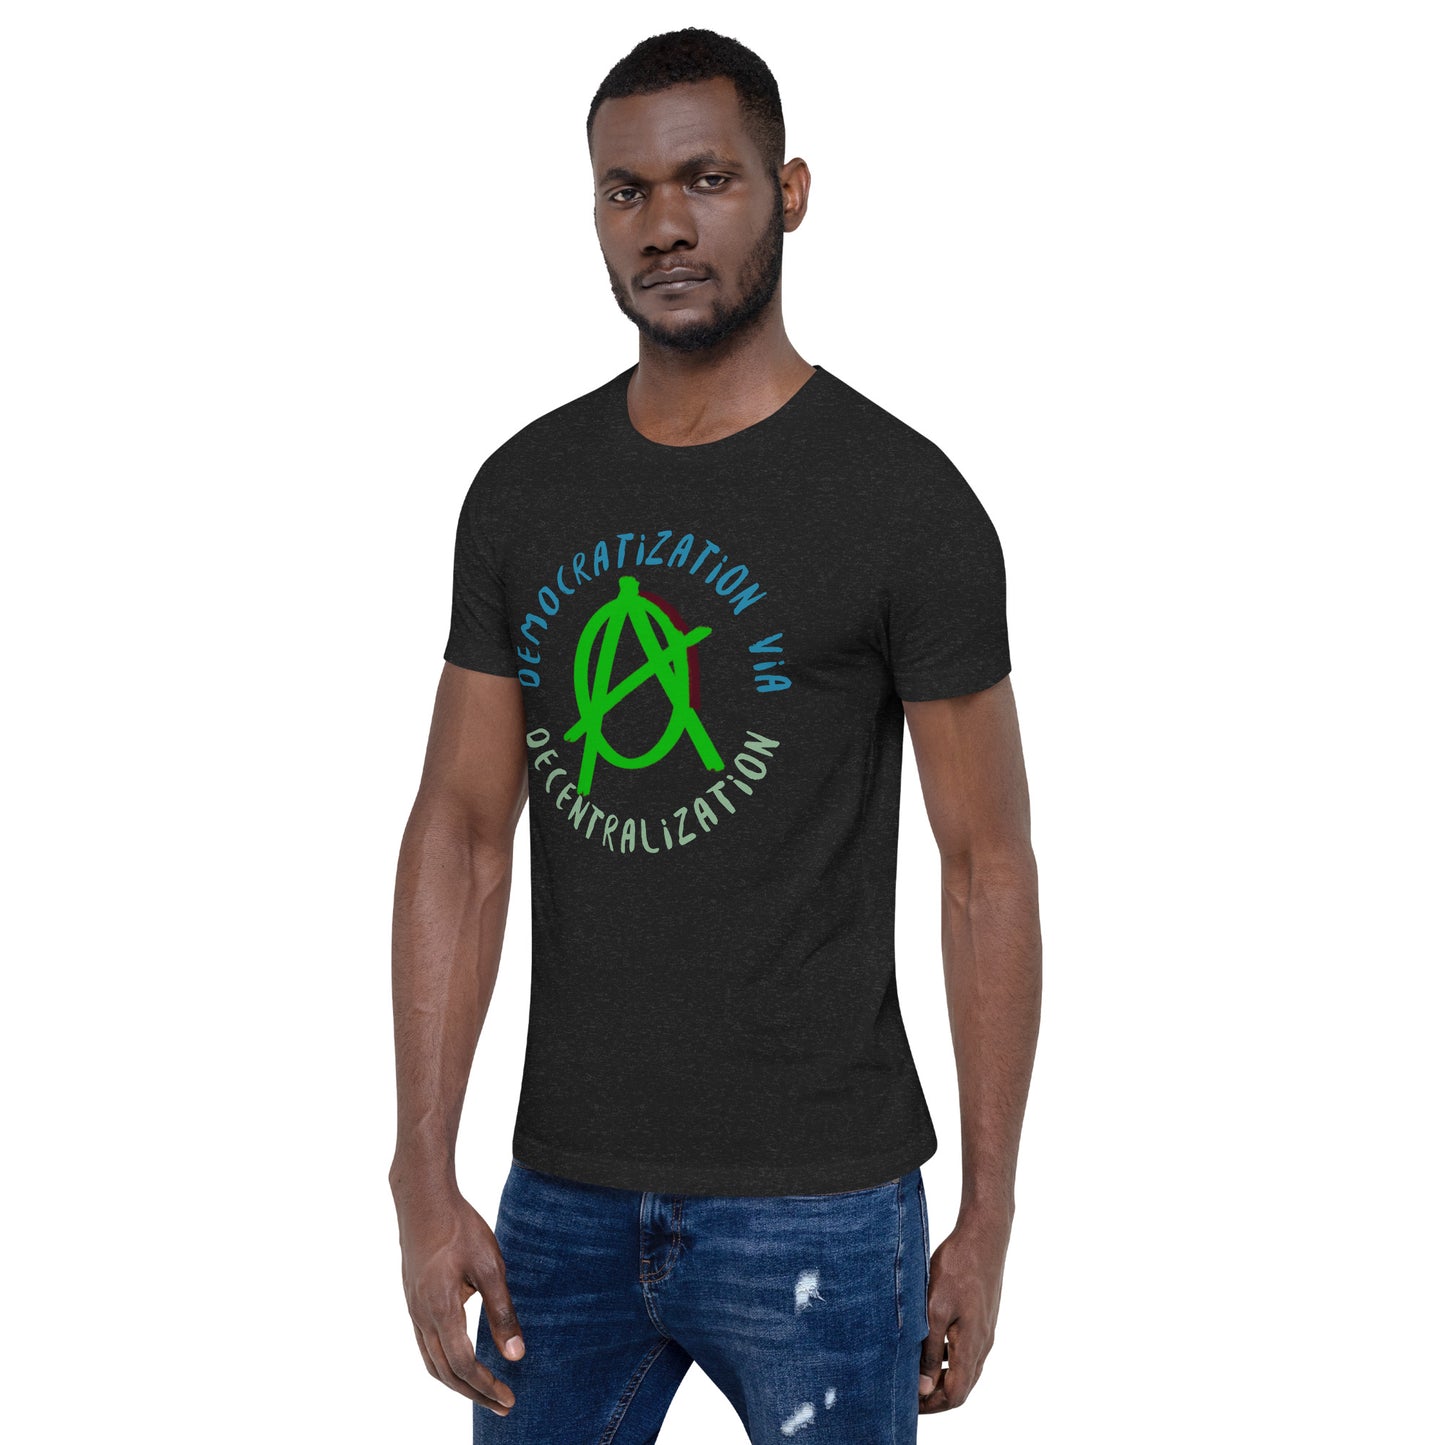 Anarchy Wear Green "Democratization Via Decentralization" Unisex t-shirt